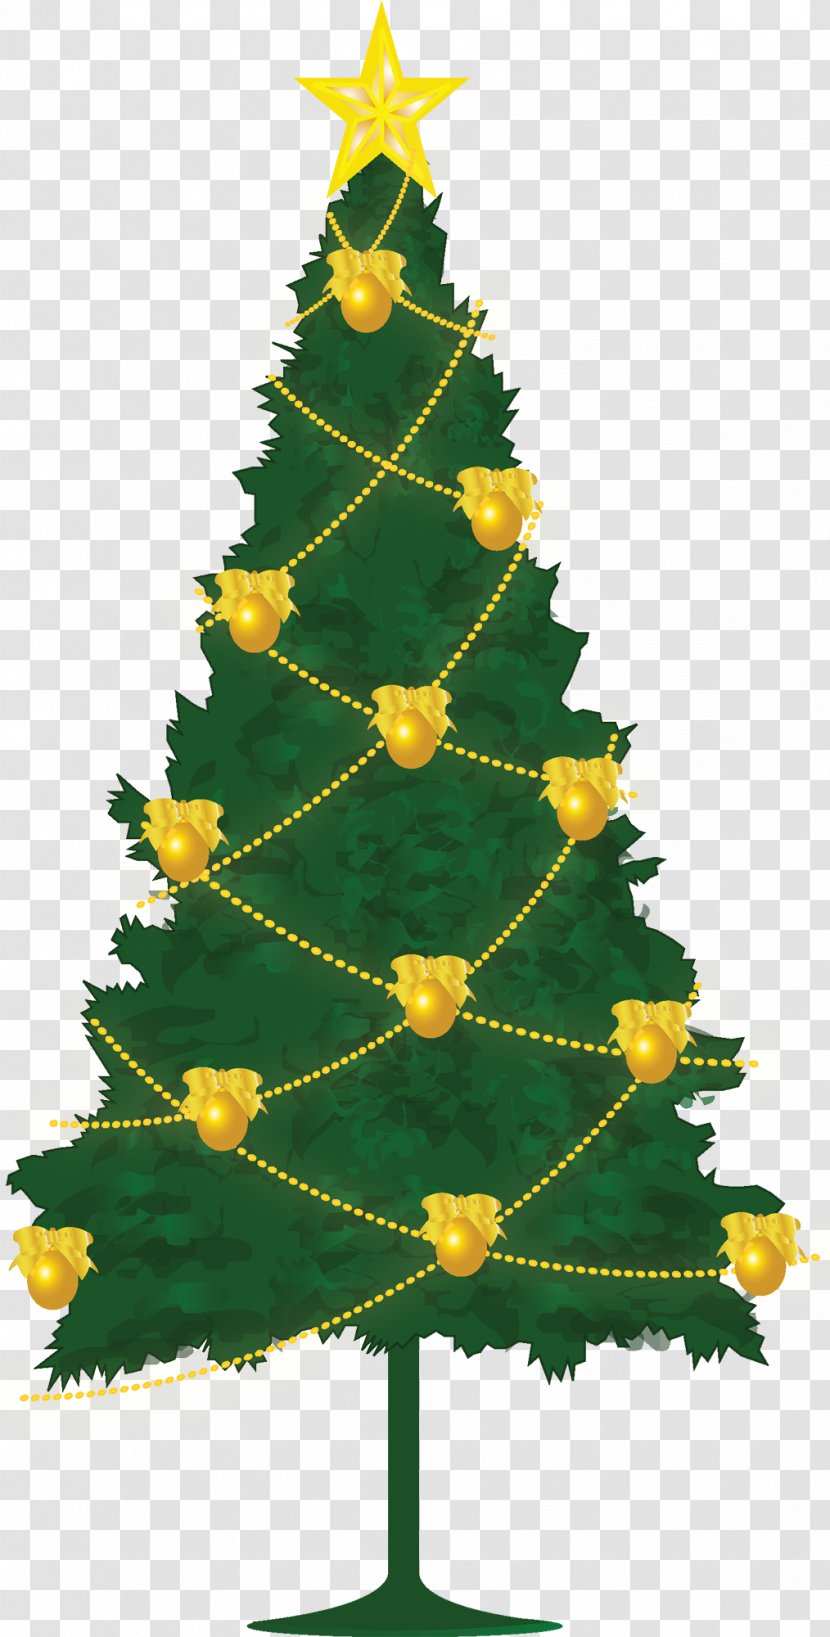 Santa Claus Christmas Ornament Tree Clip Art - Star Of Bethlehem Transparent PNG